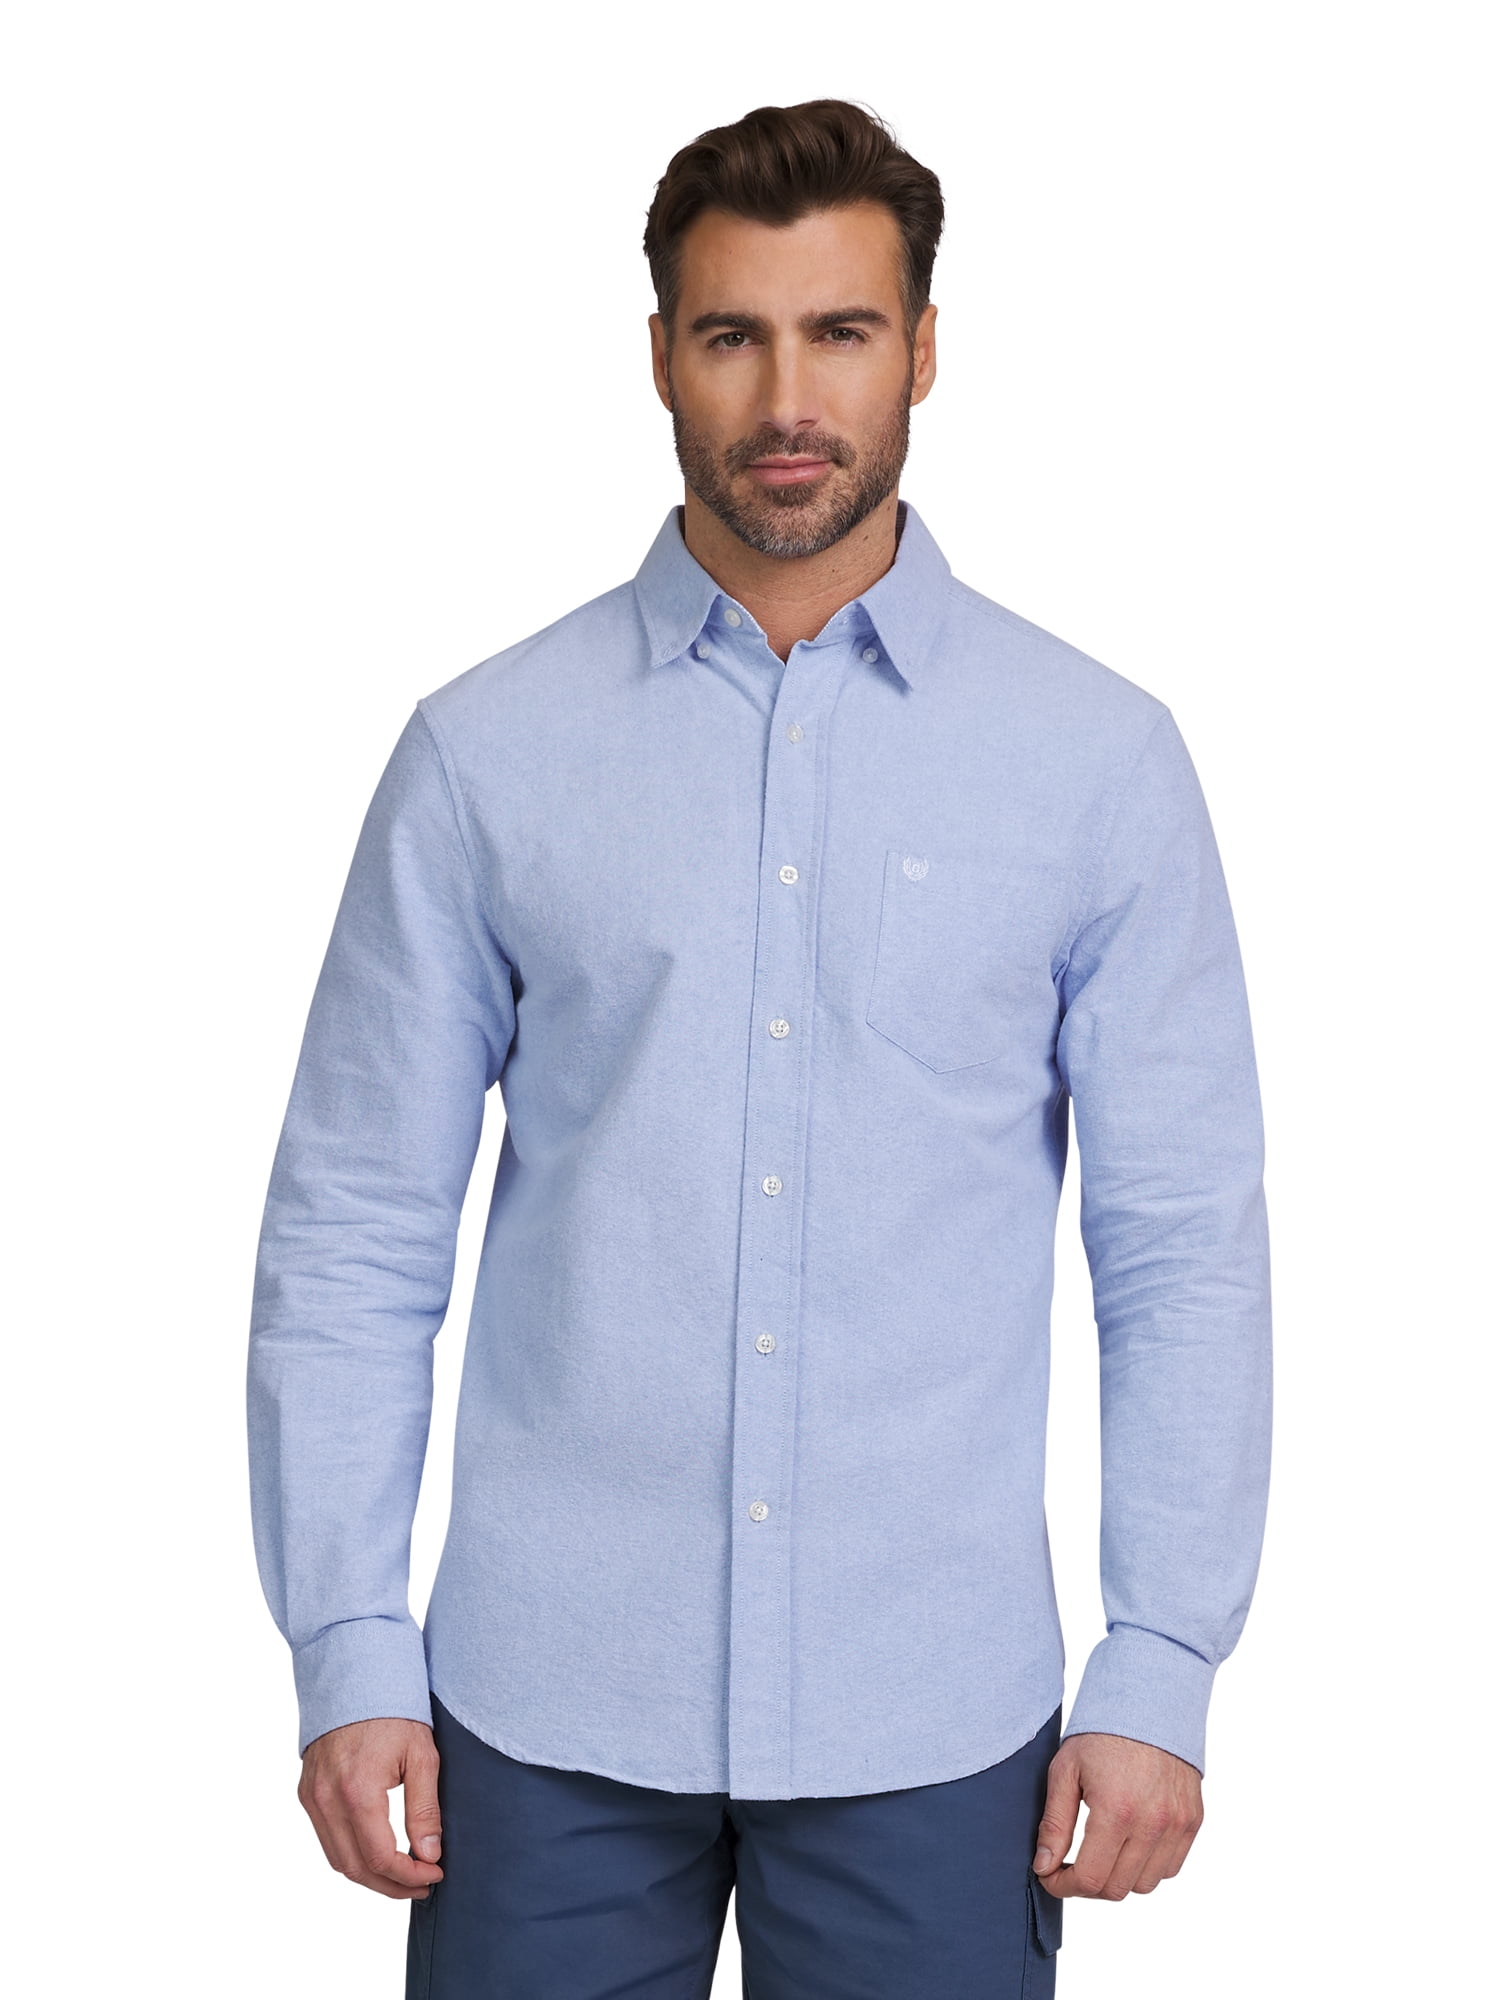 Chaps Men's Seacoast Wash Woven Oxford Shirt - Walmart.com